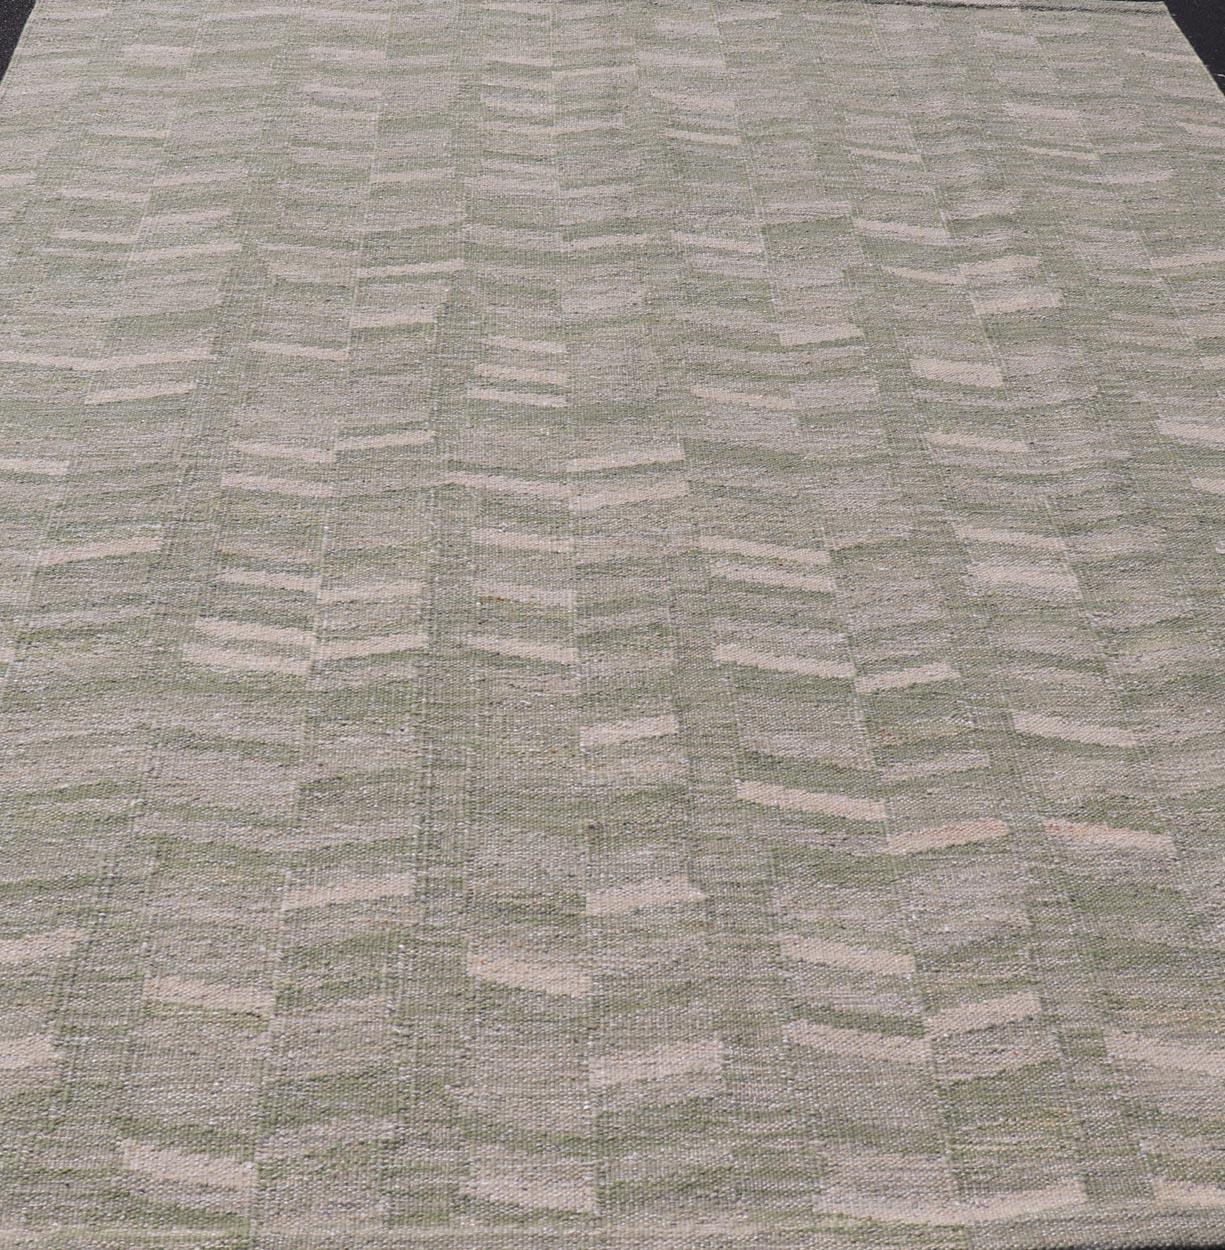 Modern Scandinavian/Swedish Flat Weave Geometric Design Rug in Green Tones. Keivan Woven Arts rug, RJK-27959, country of origin / type: Scandinavian / Scandinavian Modern Flat Weave.
Measures: 9'2 x 12'0 
This Scandinavian rug is inspired by the